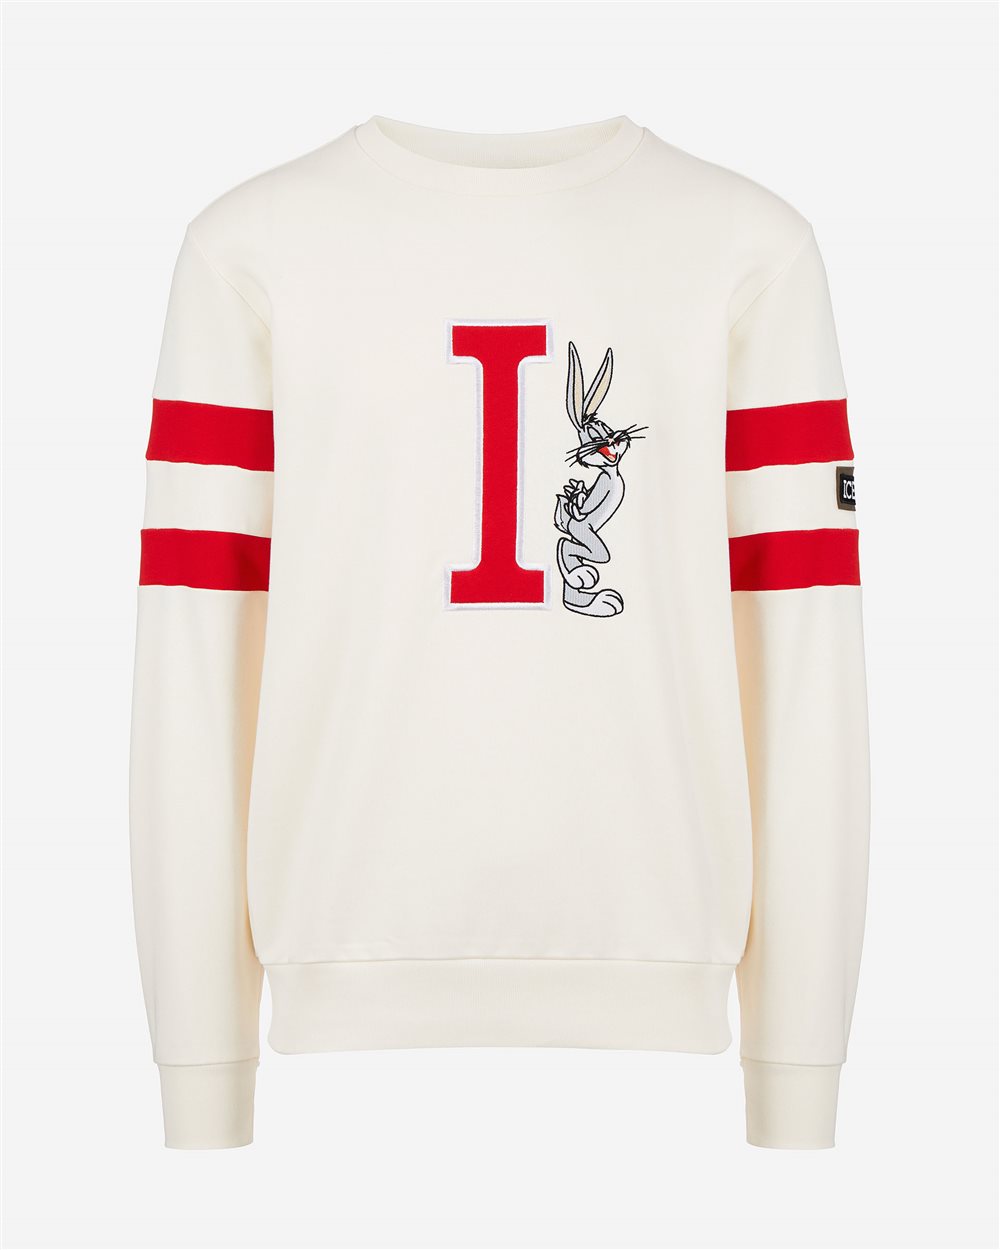 Sweatshirt with logo and Bugs Bunny - Iceberg - Official Website